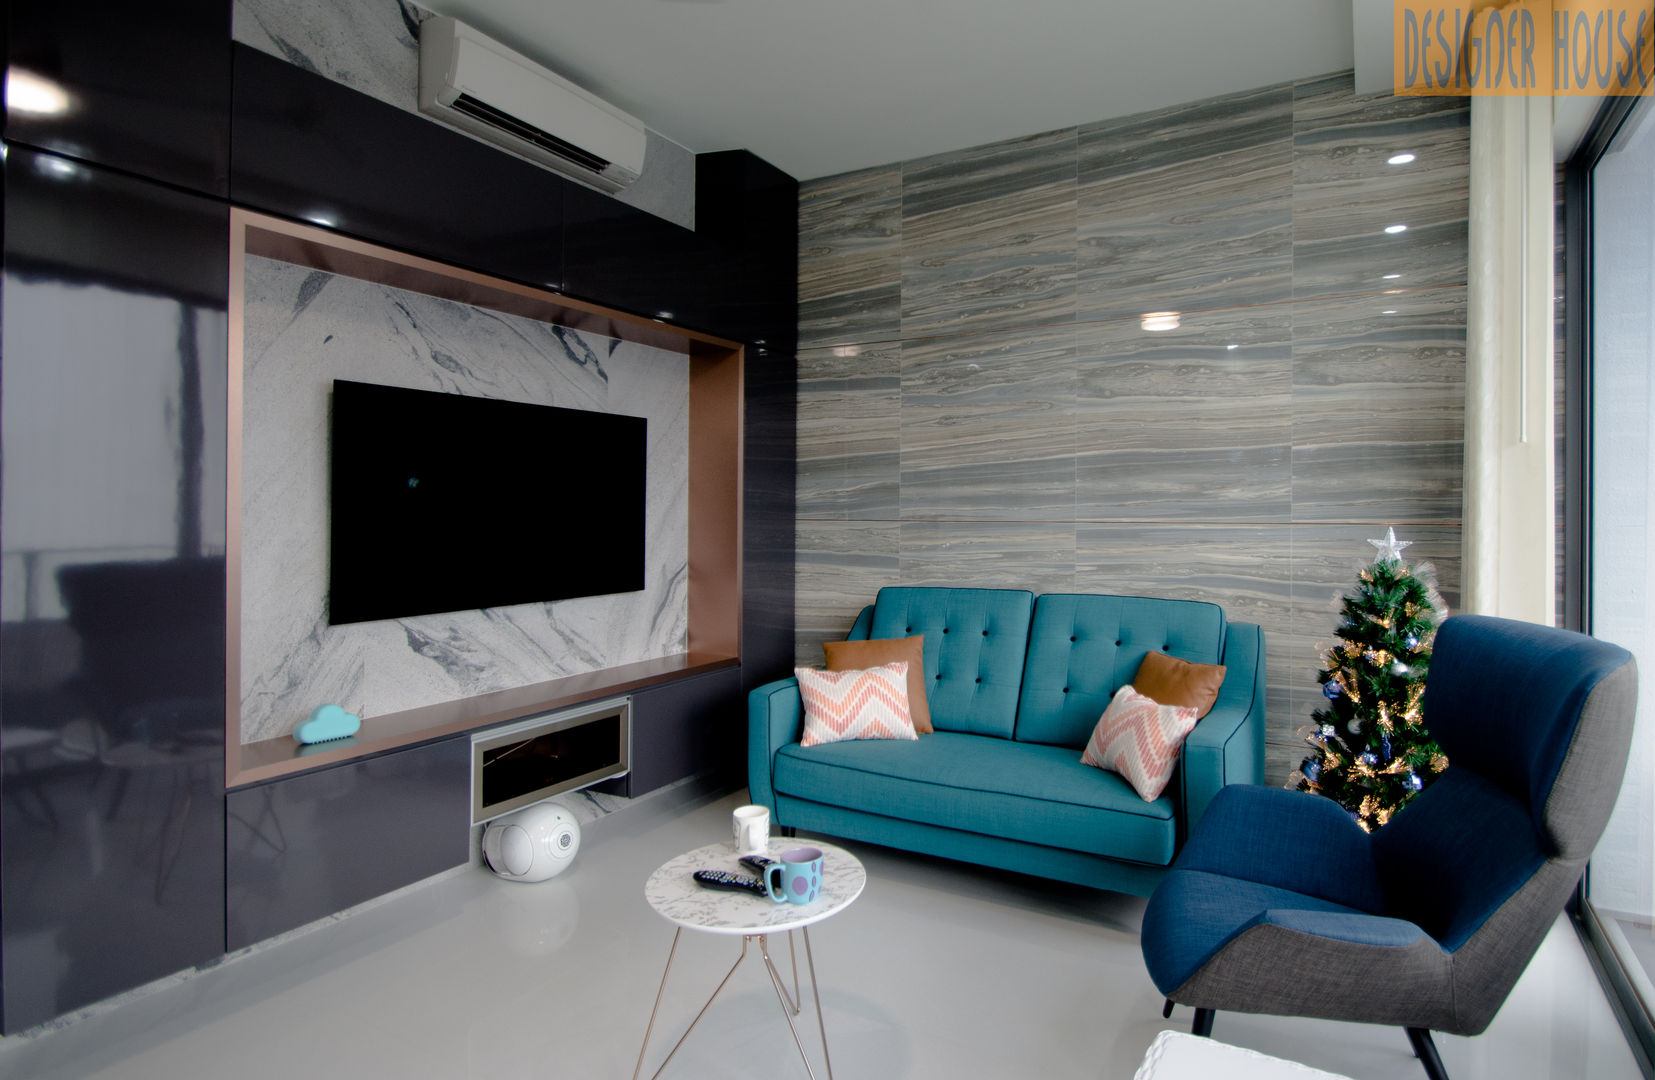 Barley Ridge Penthouse Project, Designer House Designer House Salones de estilo moderno Caliza